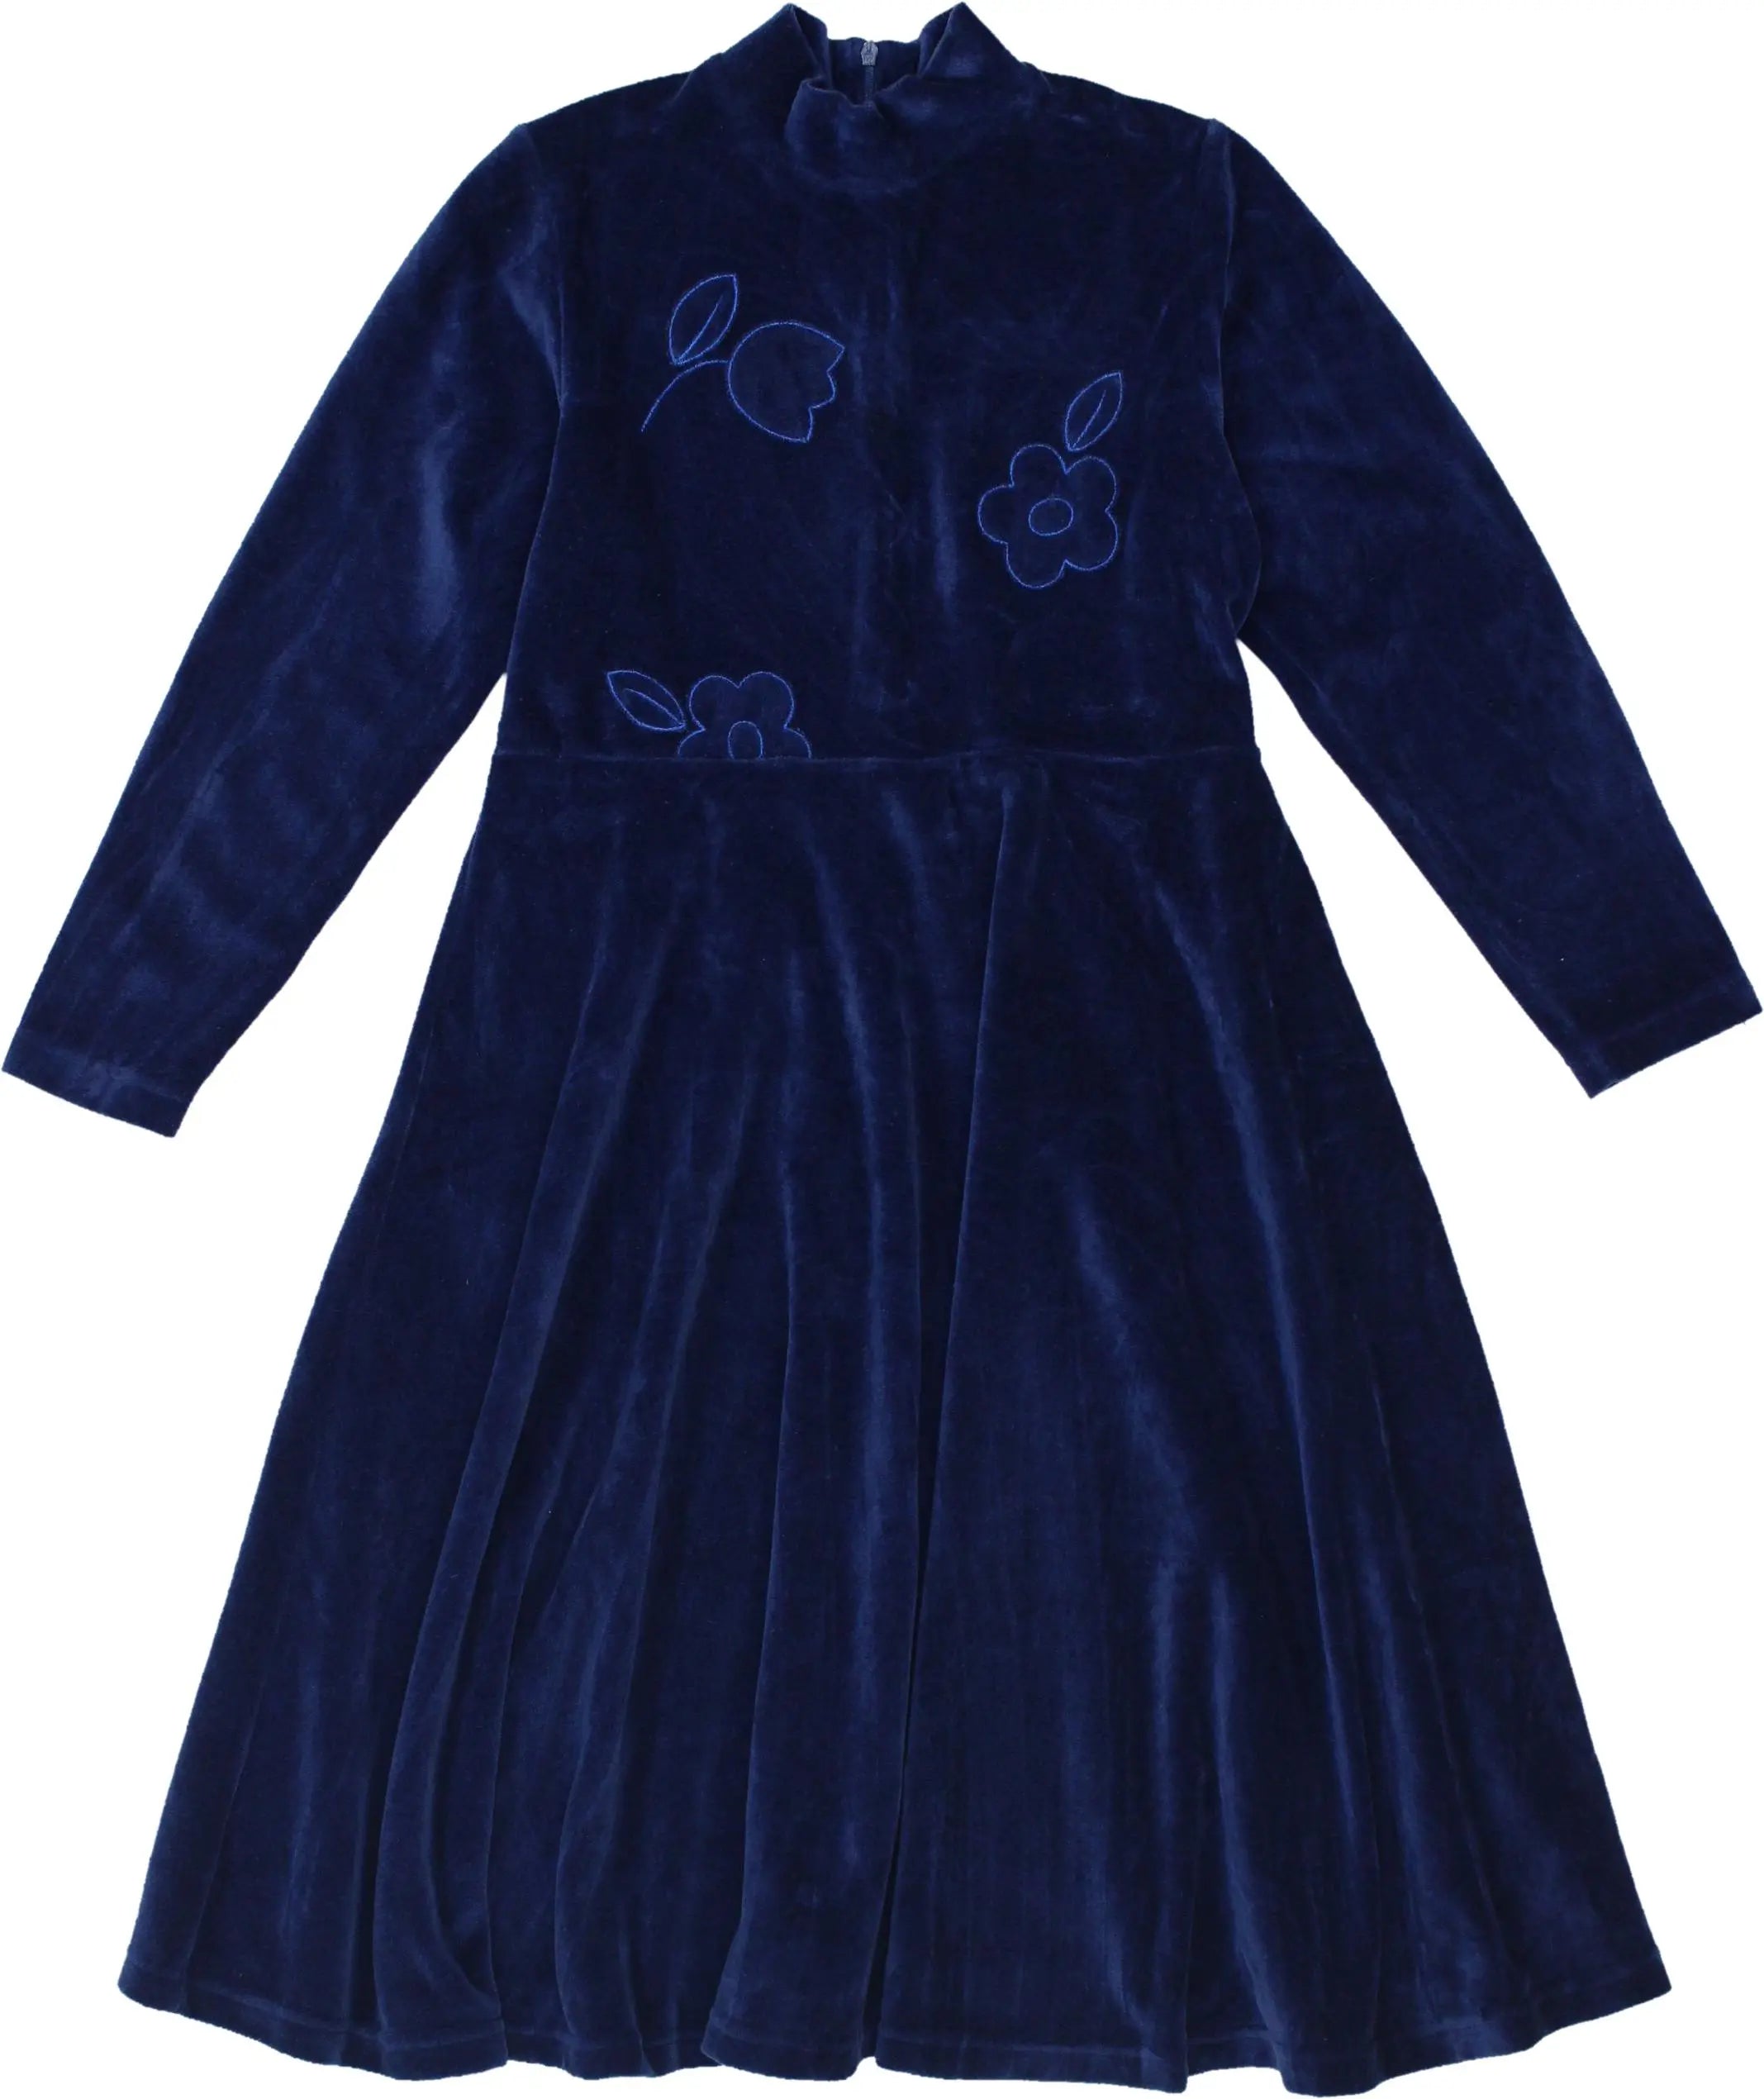 Batti Cure - Blue Velvet Dress- ThriftTale.com - Vintage and second handclothing